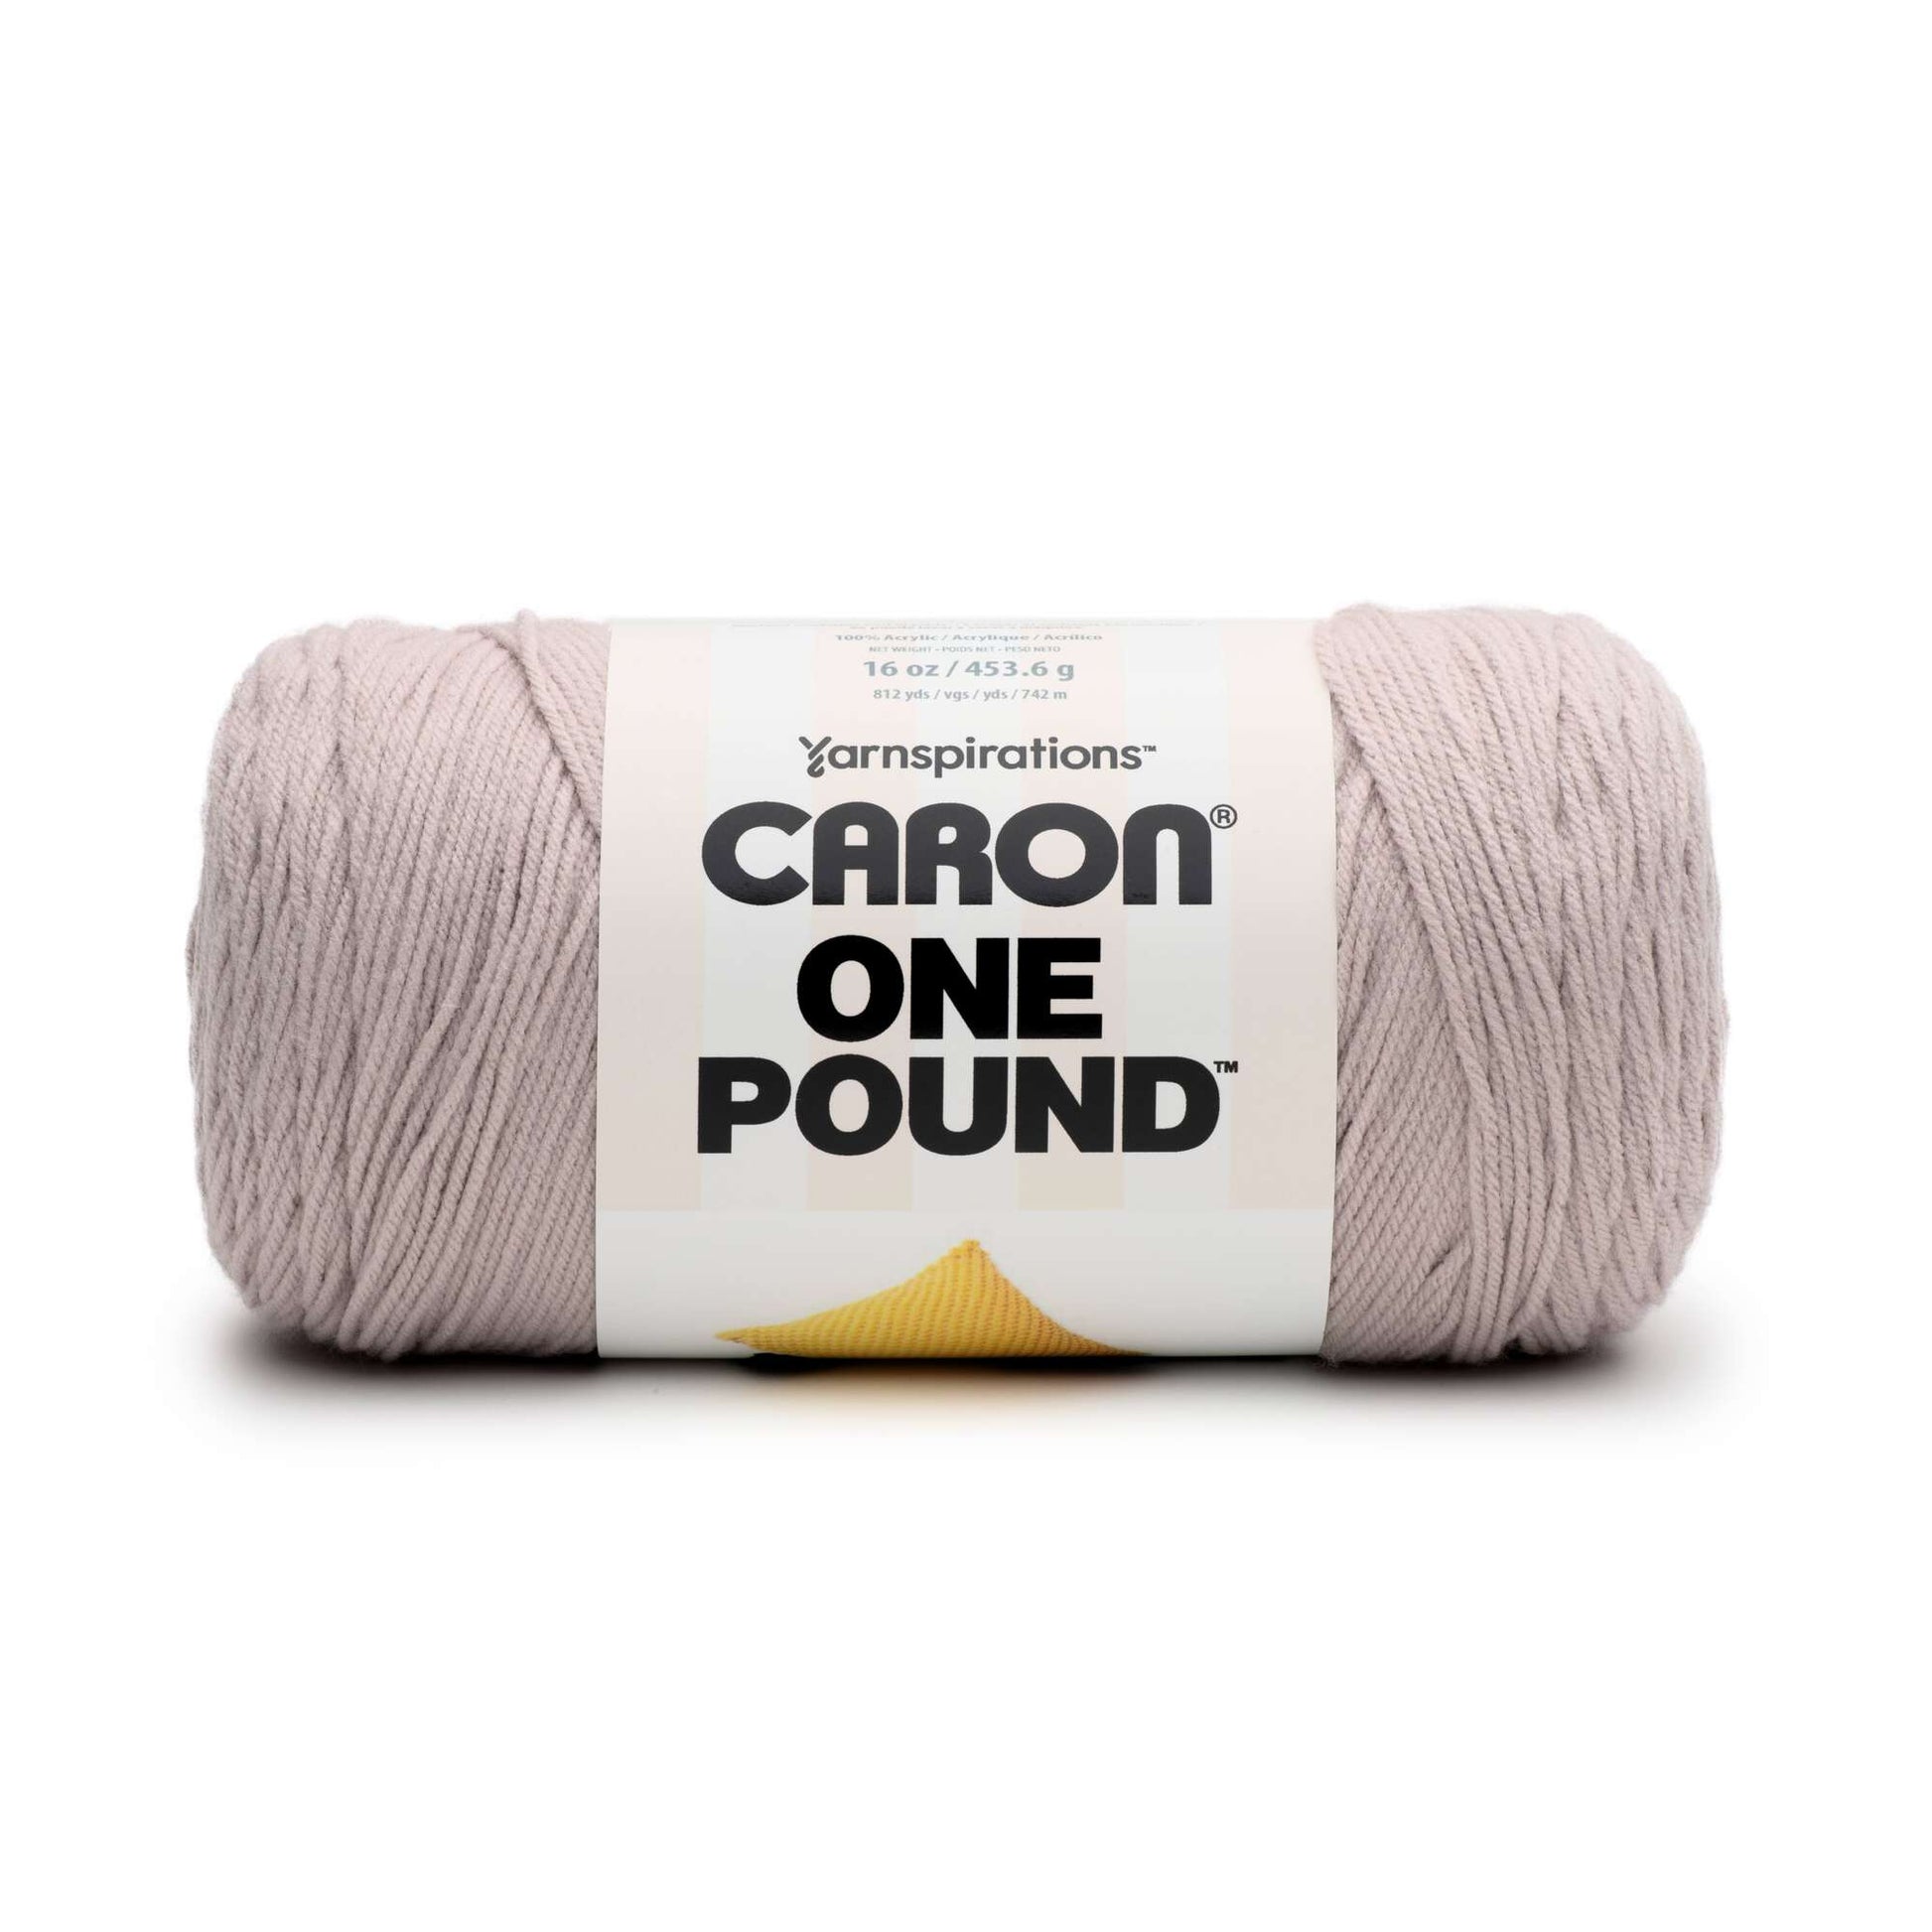 Caron One Pound Scarlet Yarn